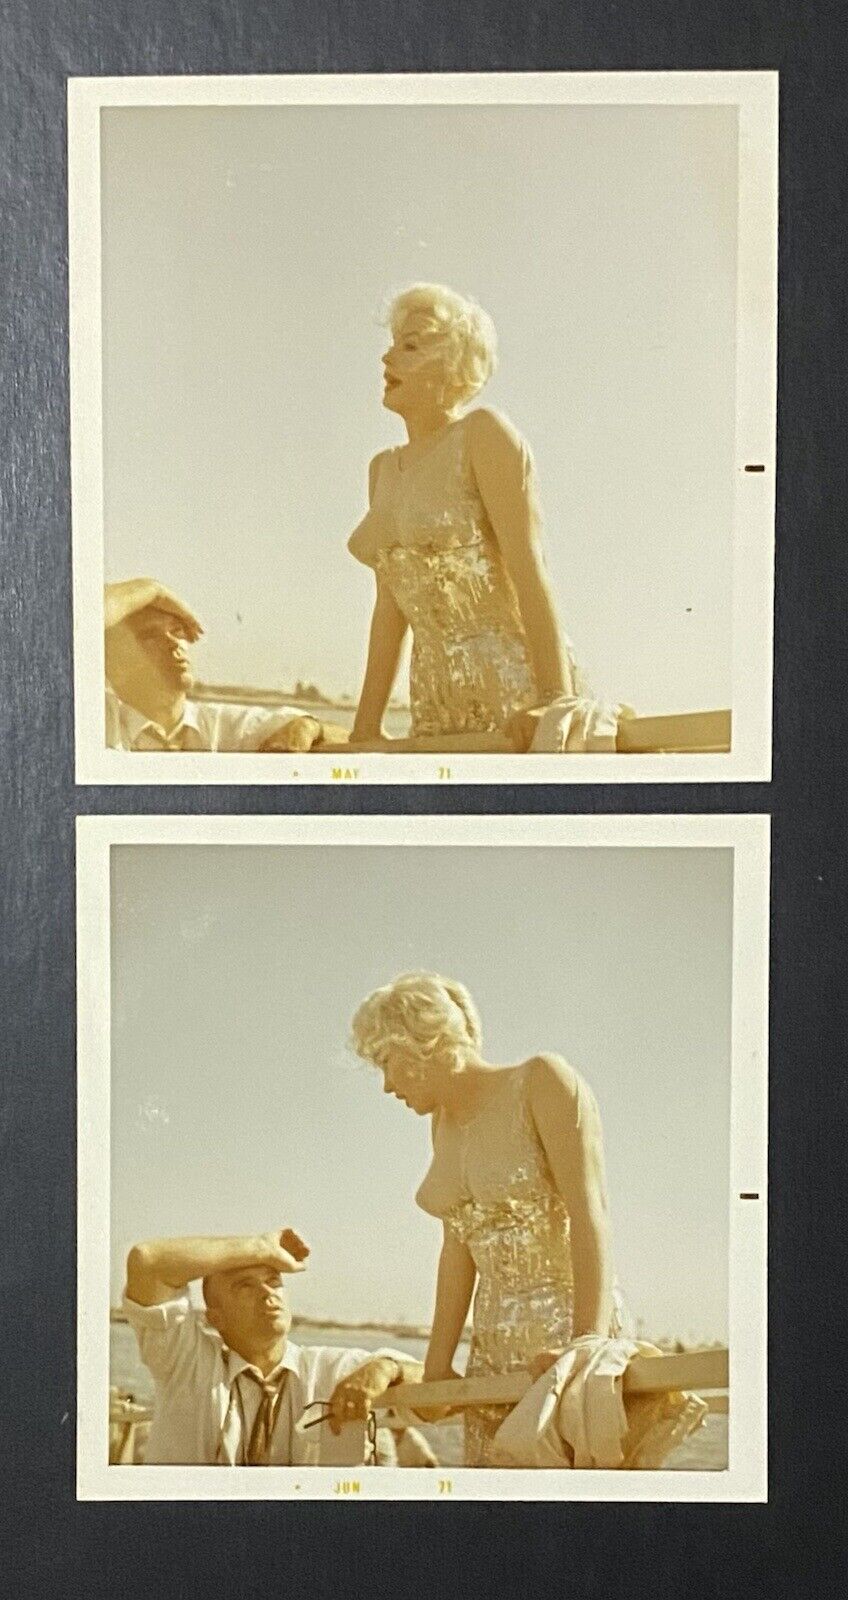 Two 1959 Marilyn Monroe Original Photo Some Like It Hot Stills Candid